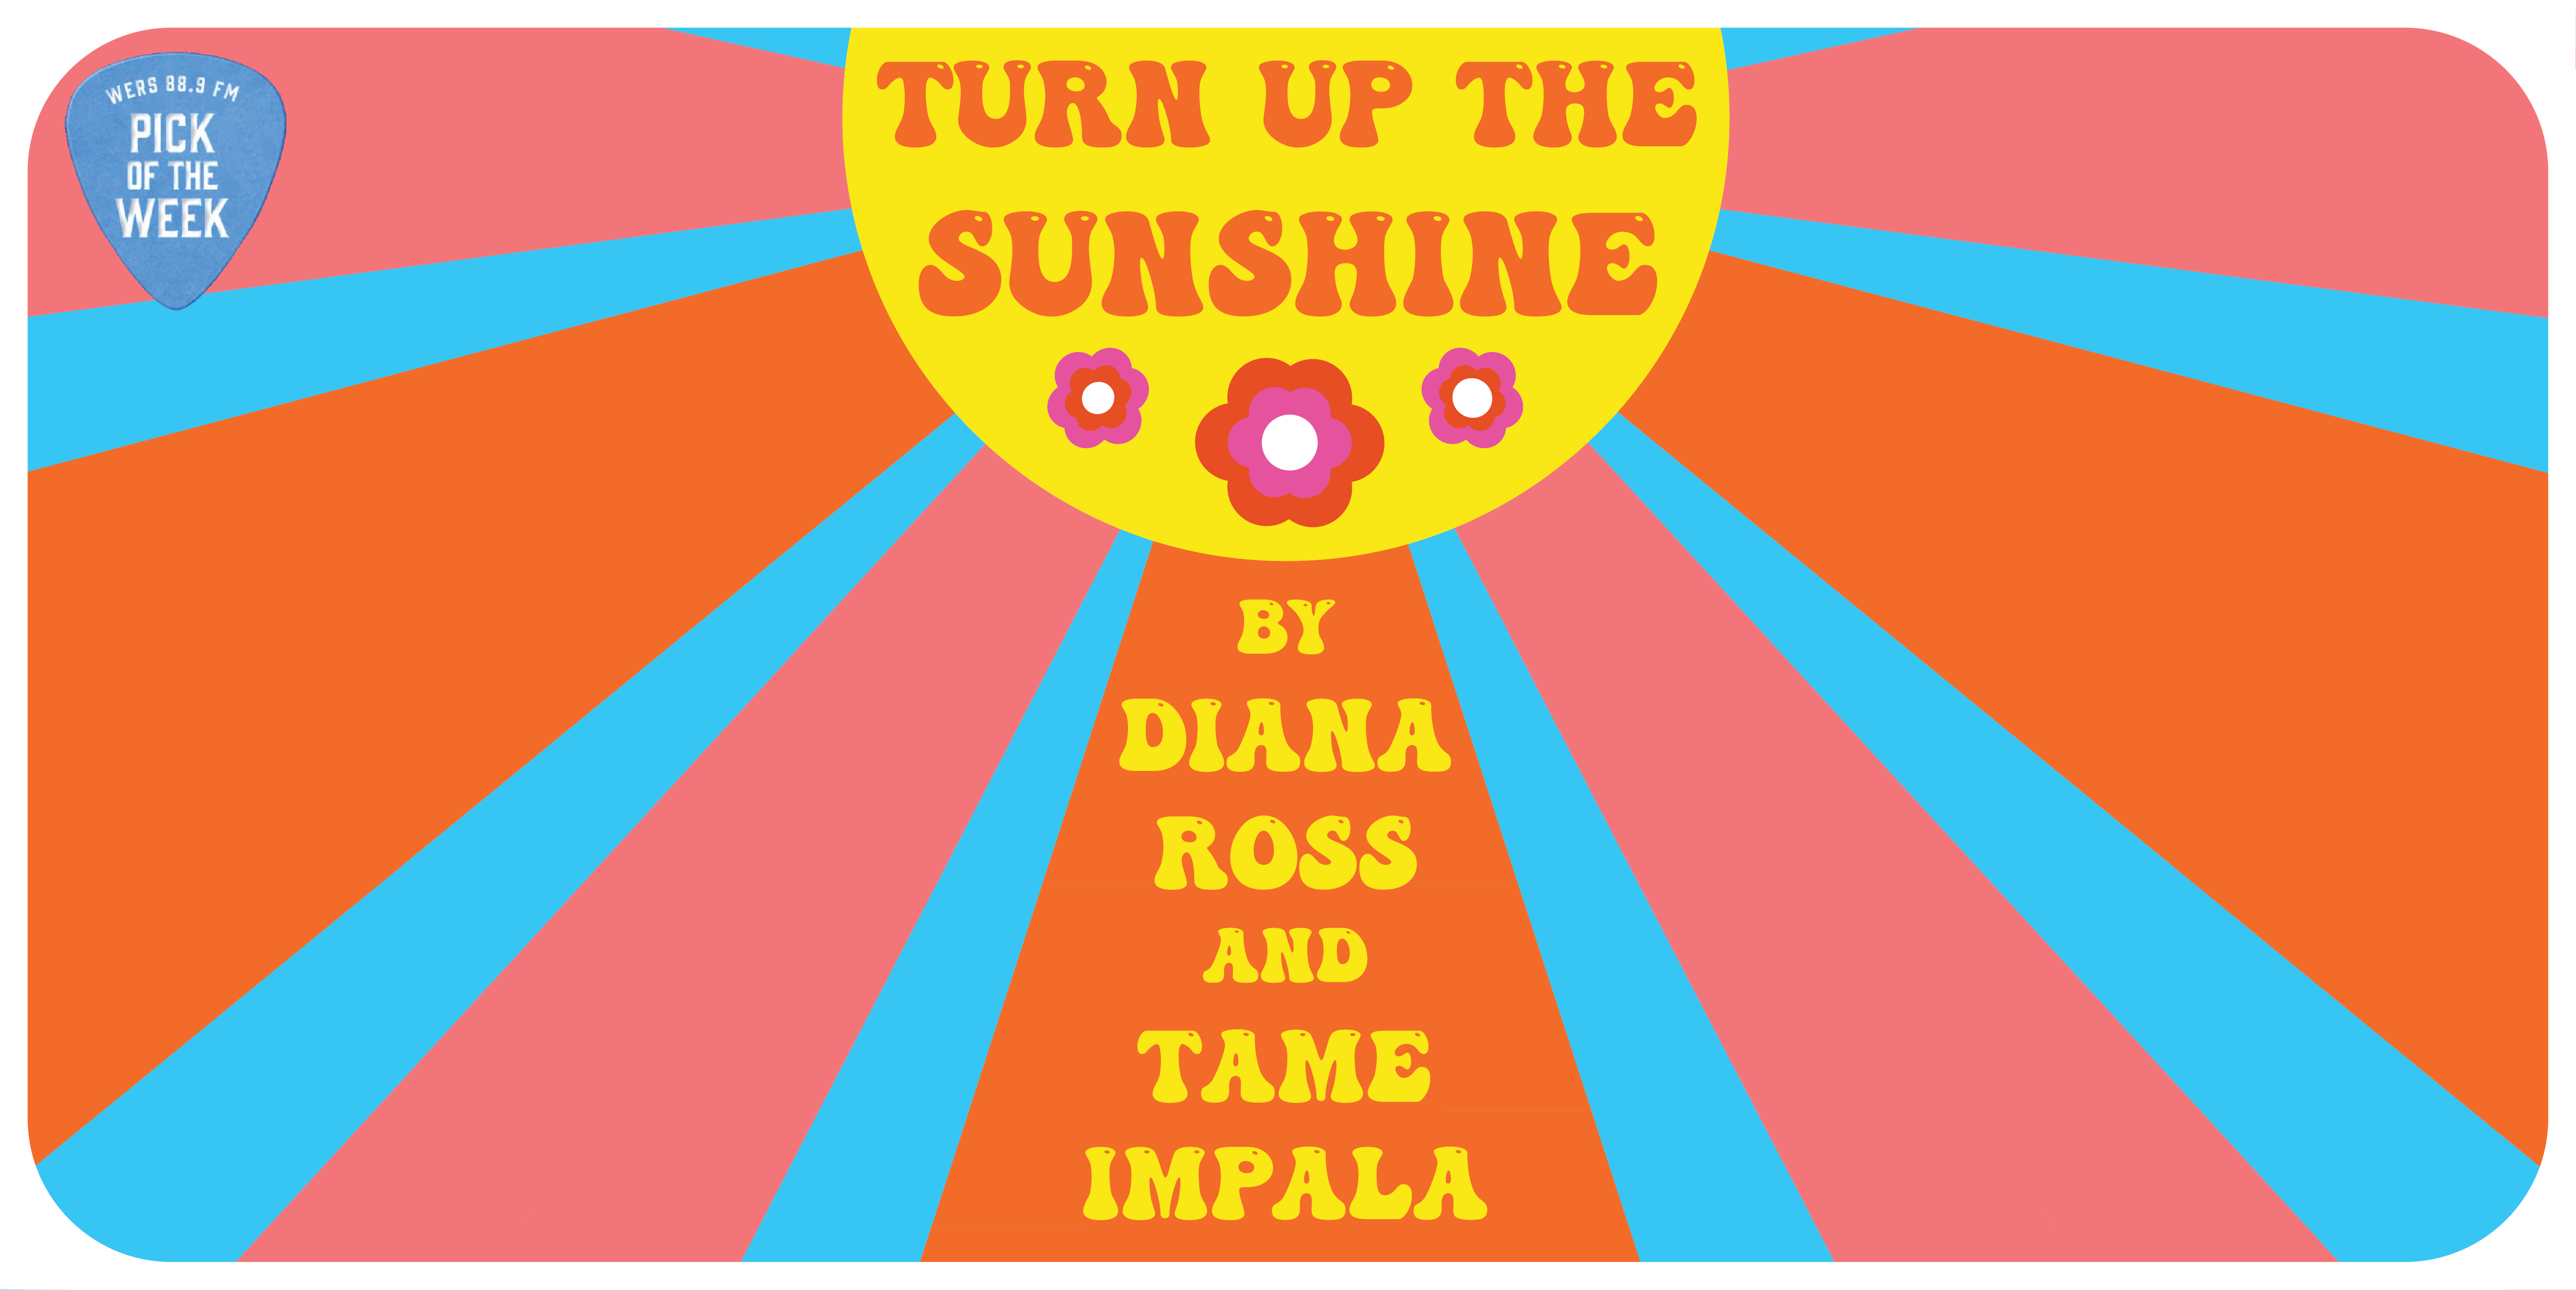 Diana Ross & Tame Impala – Turn Up The Sunshine Lyrics